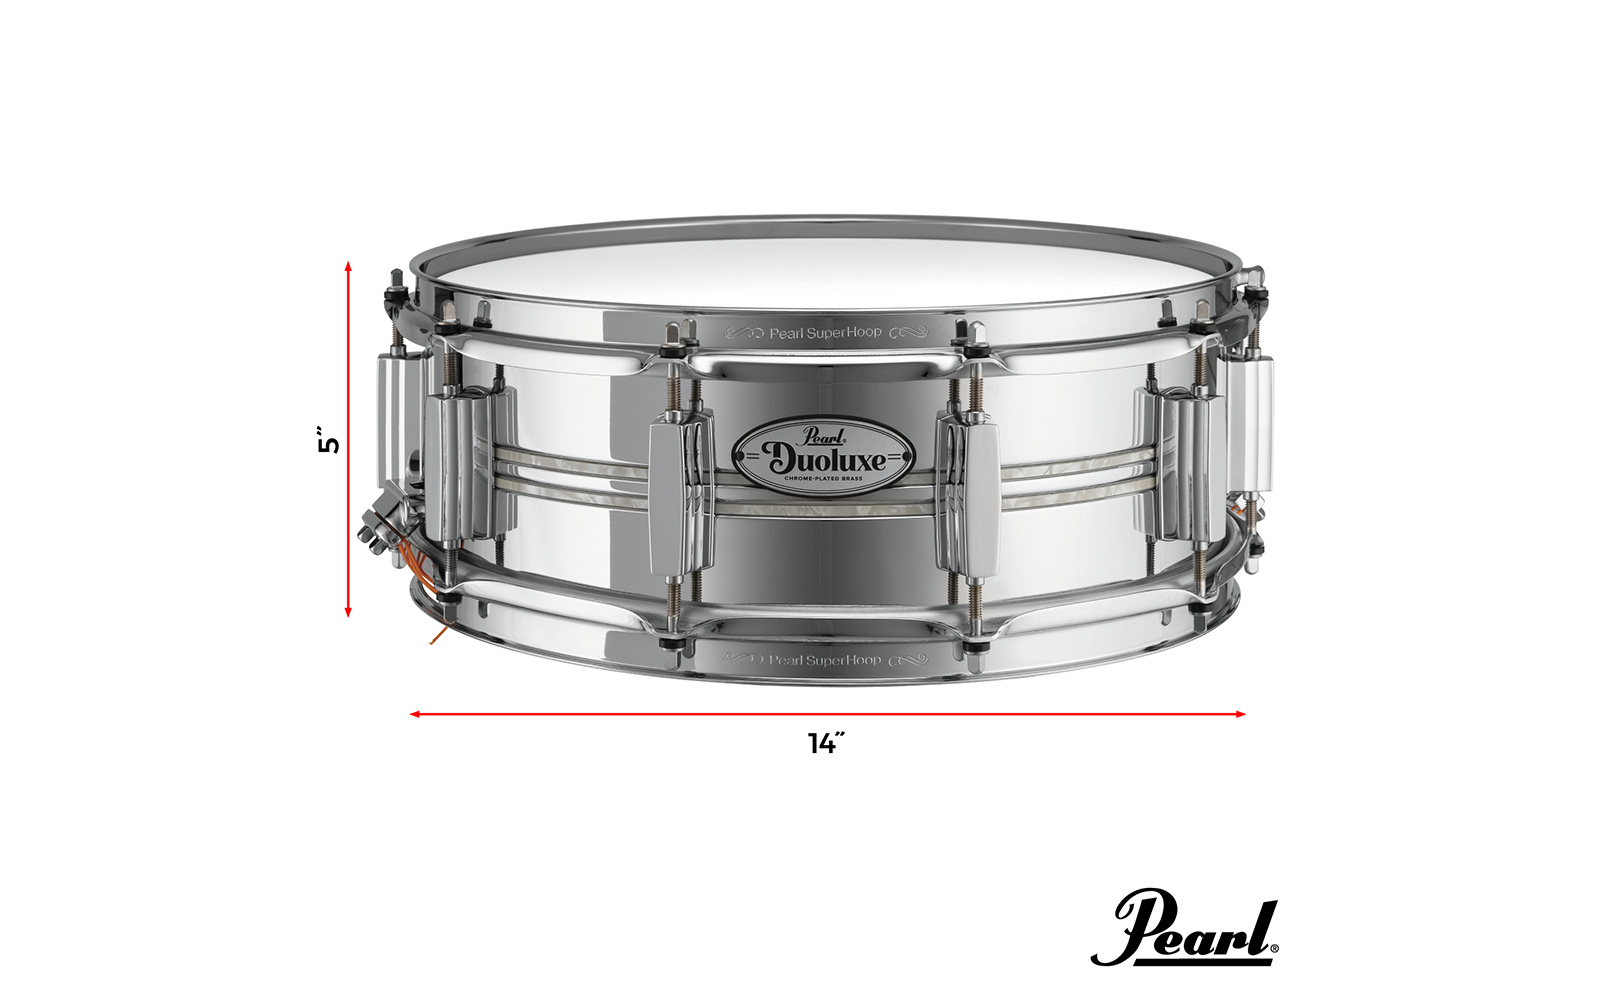 Duoluxe | パール楽器【公式サイト】Pearl Drums